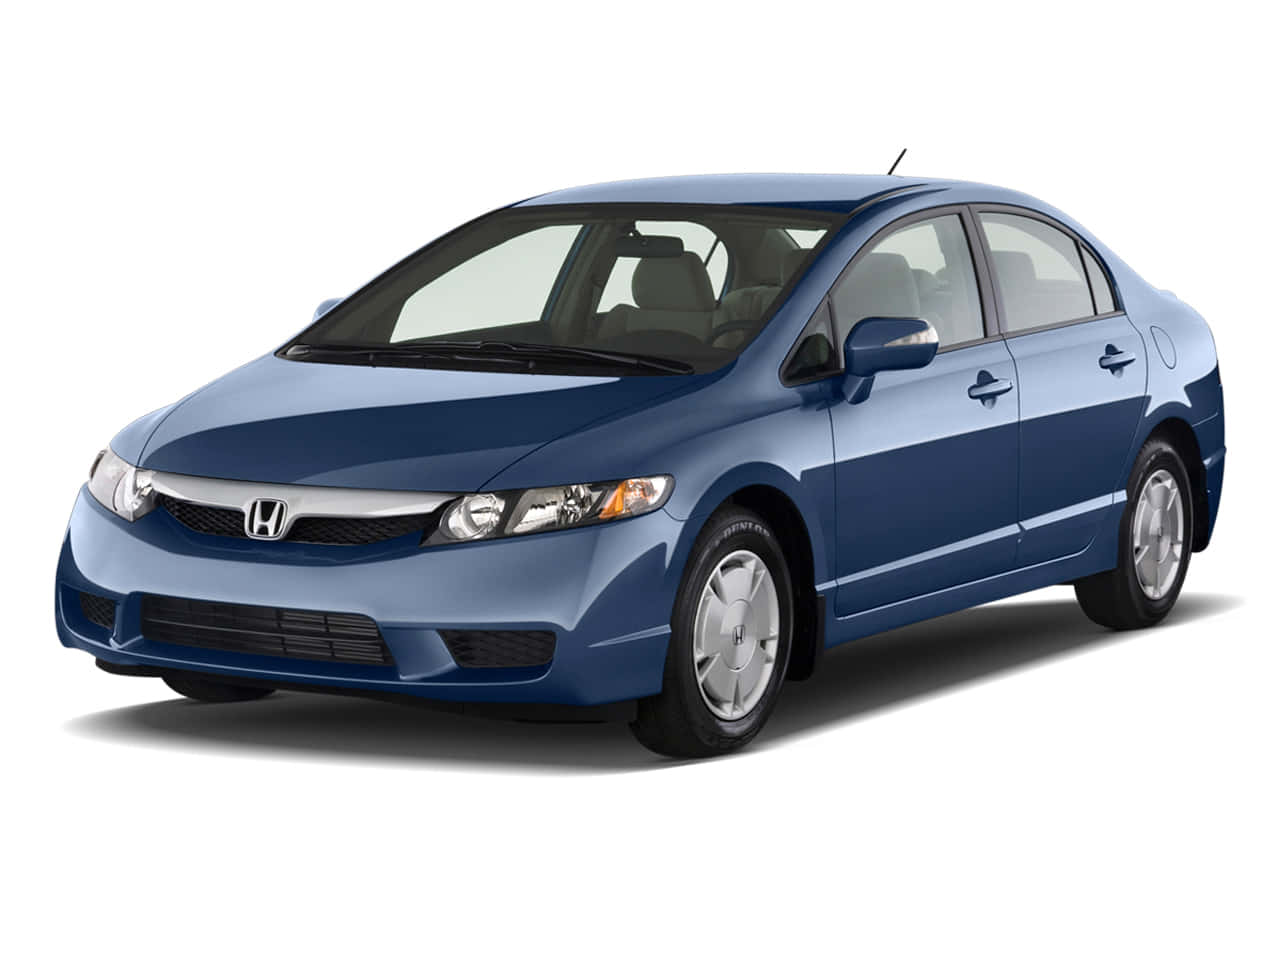 Blue Honda Civic Car Picture